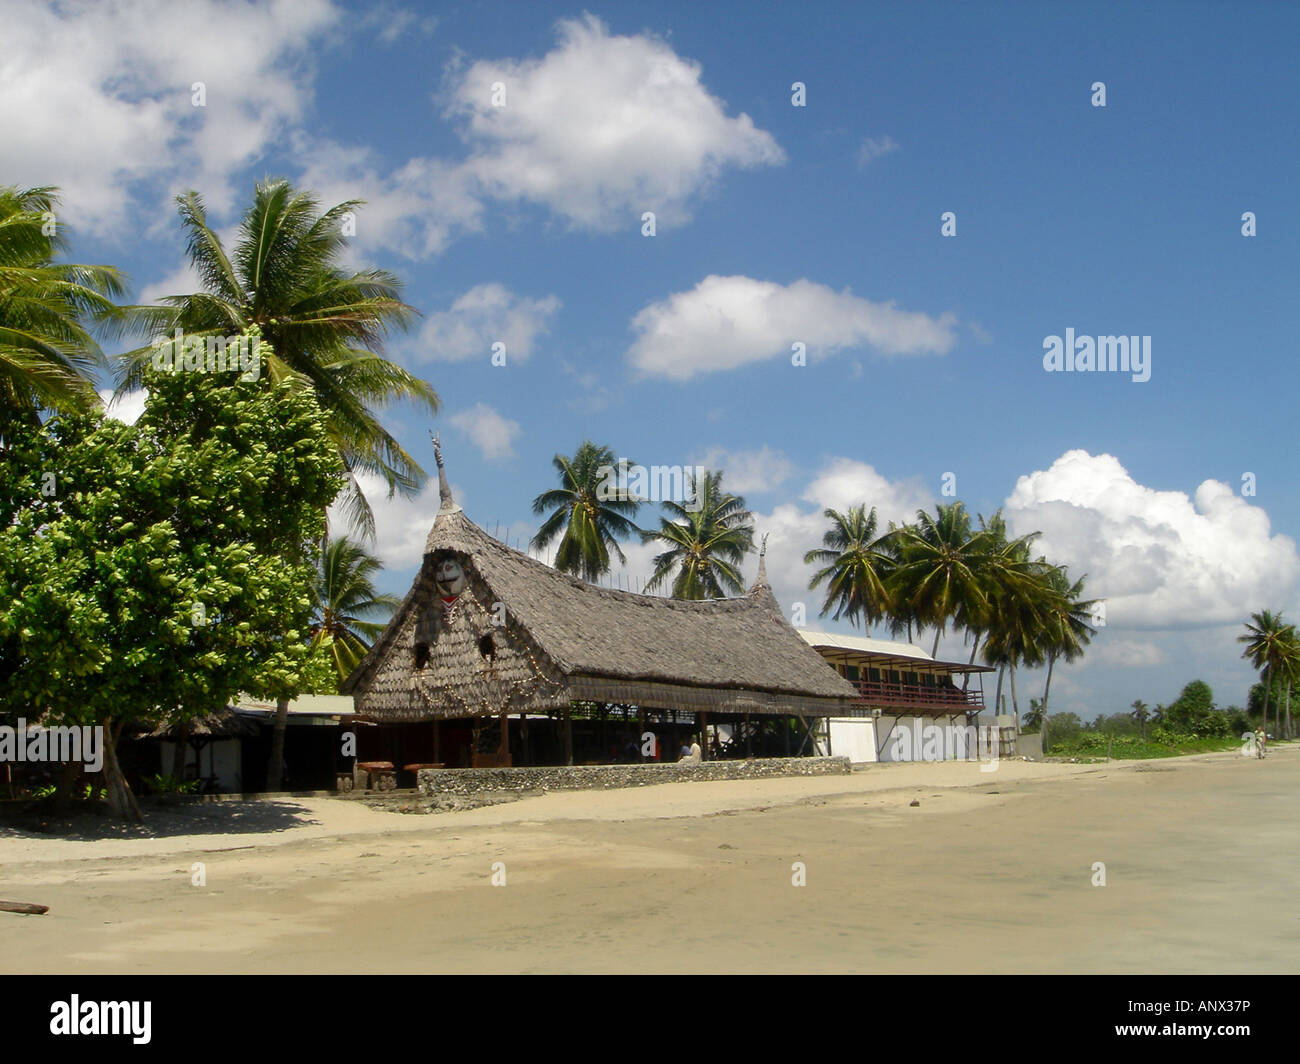 lang house at palm beach - Wewak, Papua New Guinea Stock Photo - Alamy